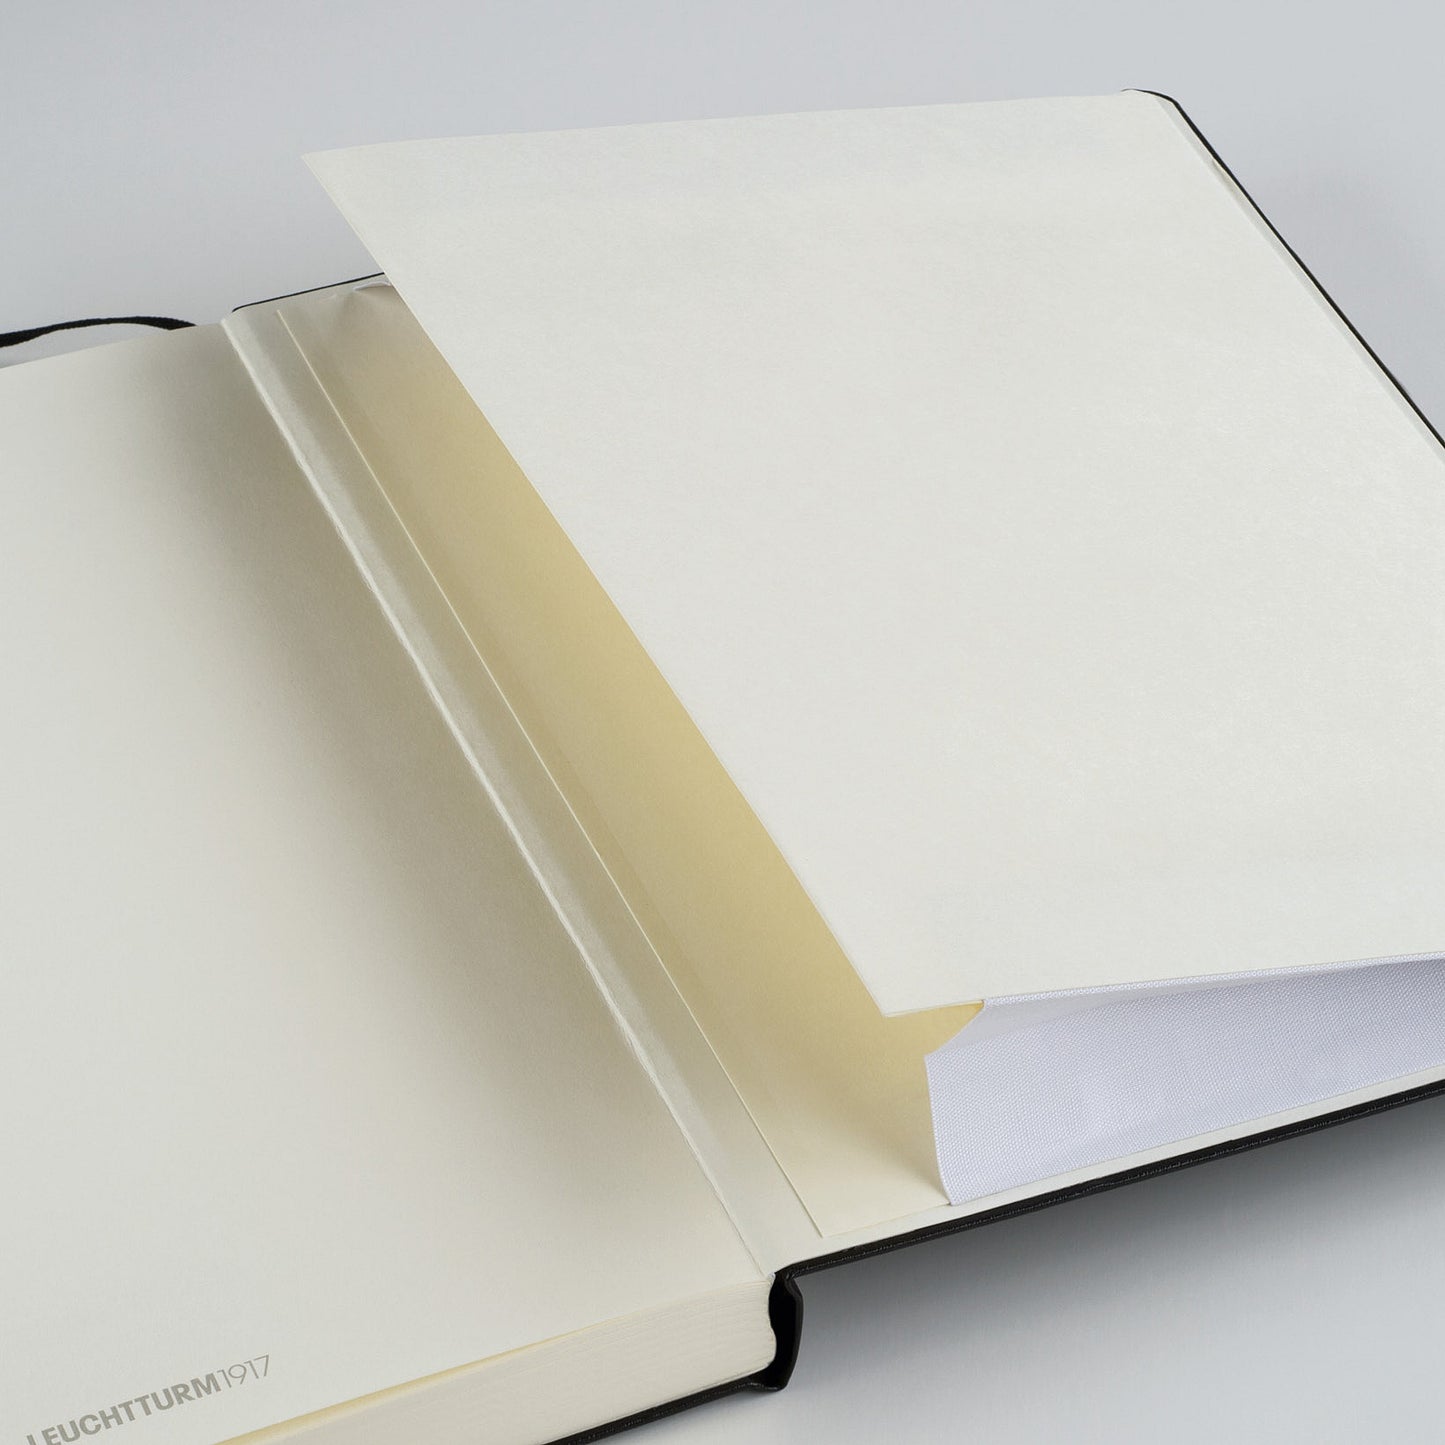 Leuchtturm1917 A5 Medium Hardcover Notebook - Sage / Ruled